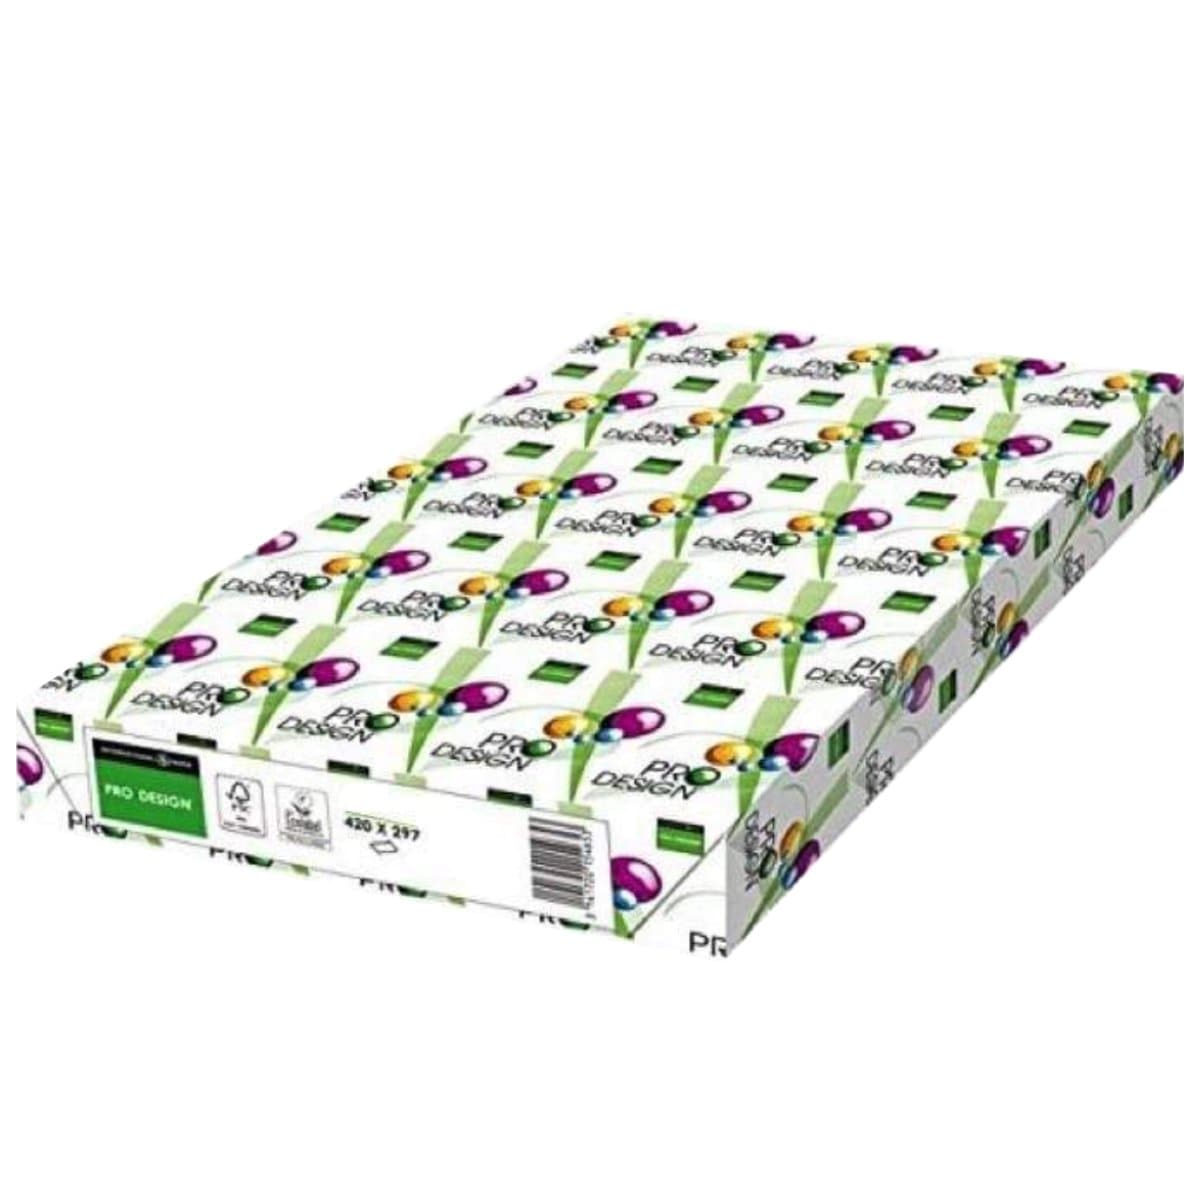 PRO-DESIGN Premium Paper A3, 250gsm, 125sheets/pack, White